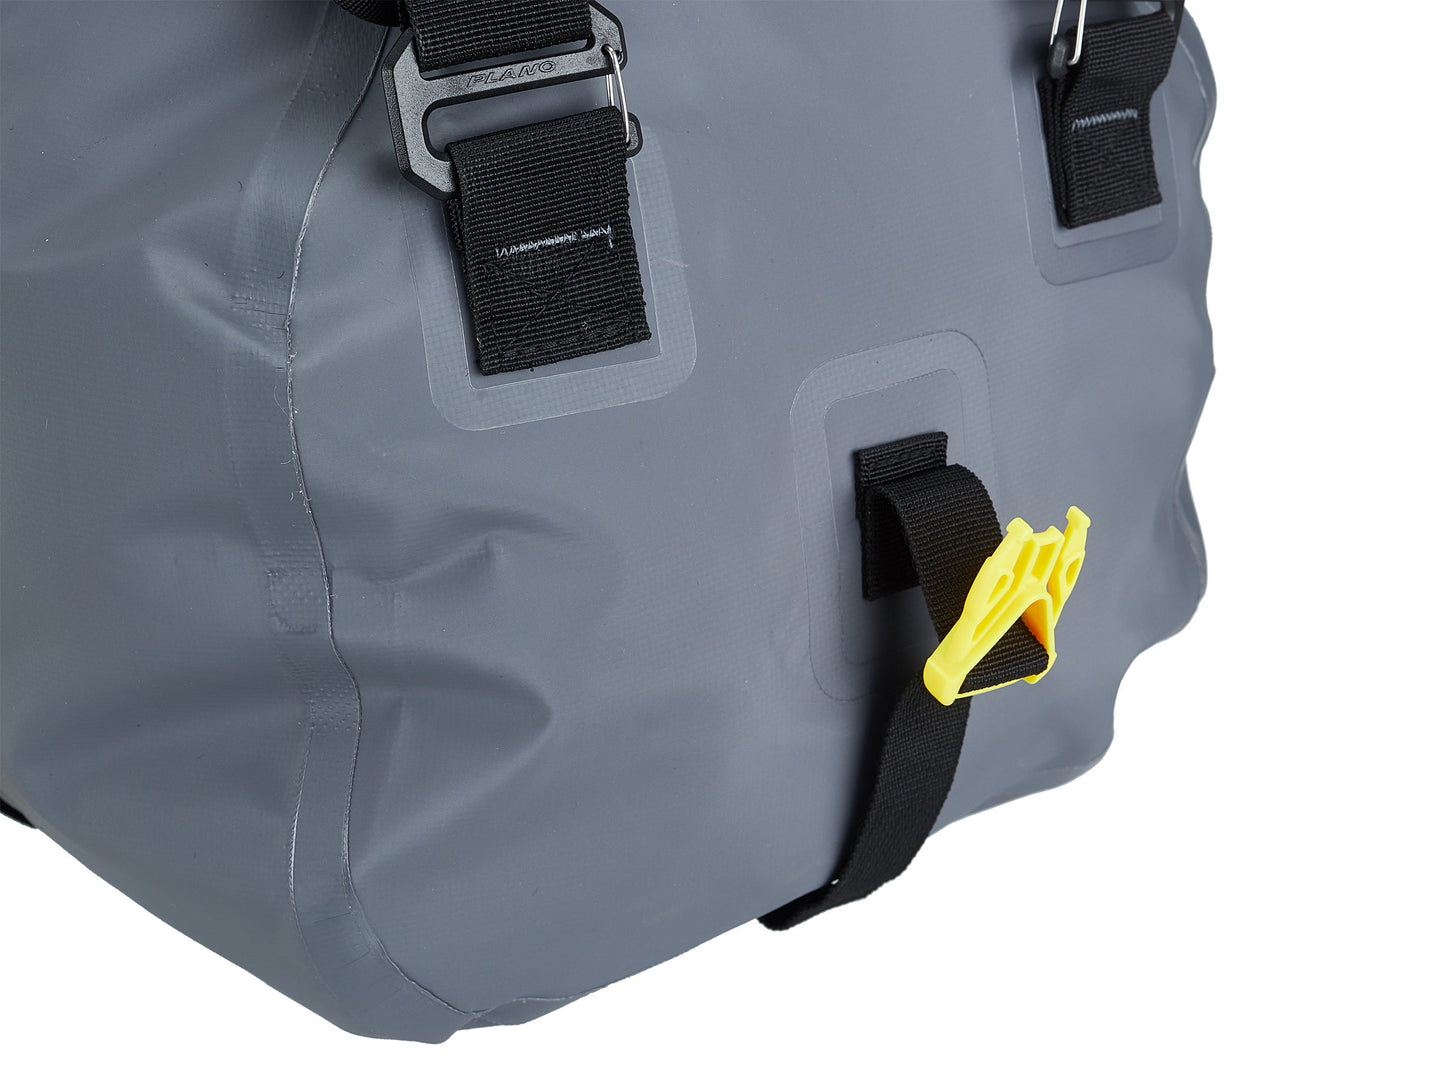 Fishing and Tackle Storage - Plano - Plano Z-Series Waterproof Duffle Bag